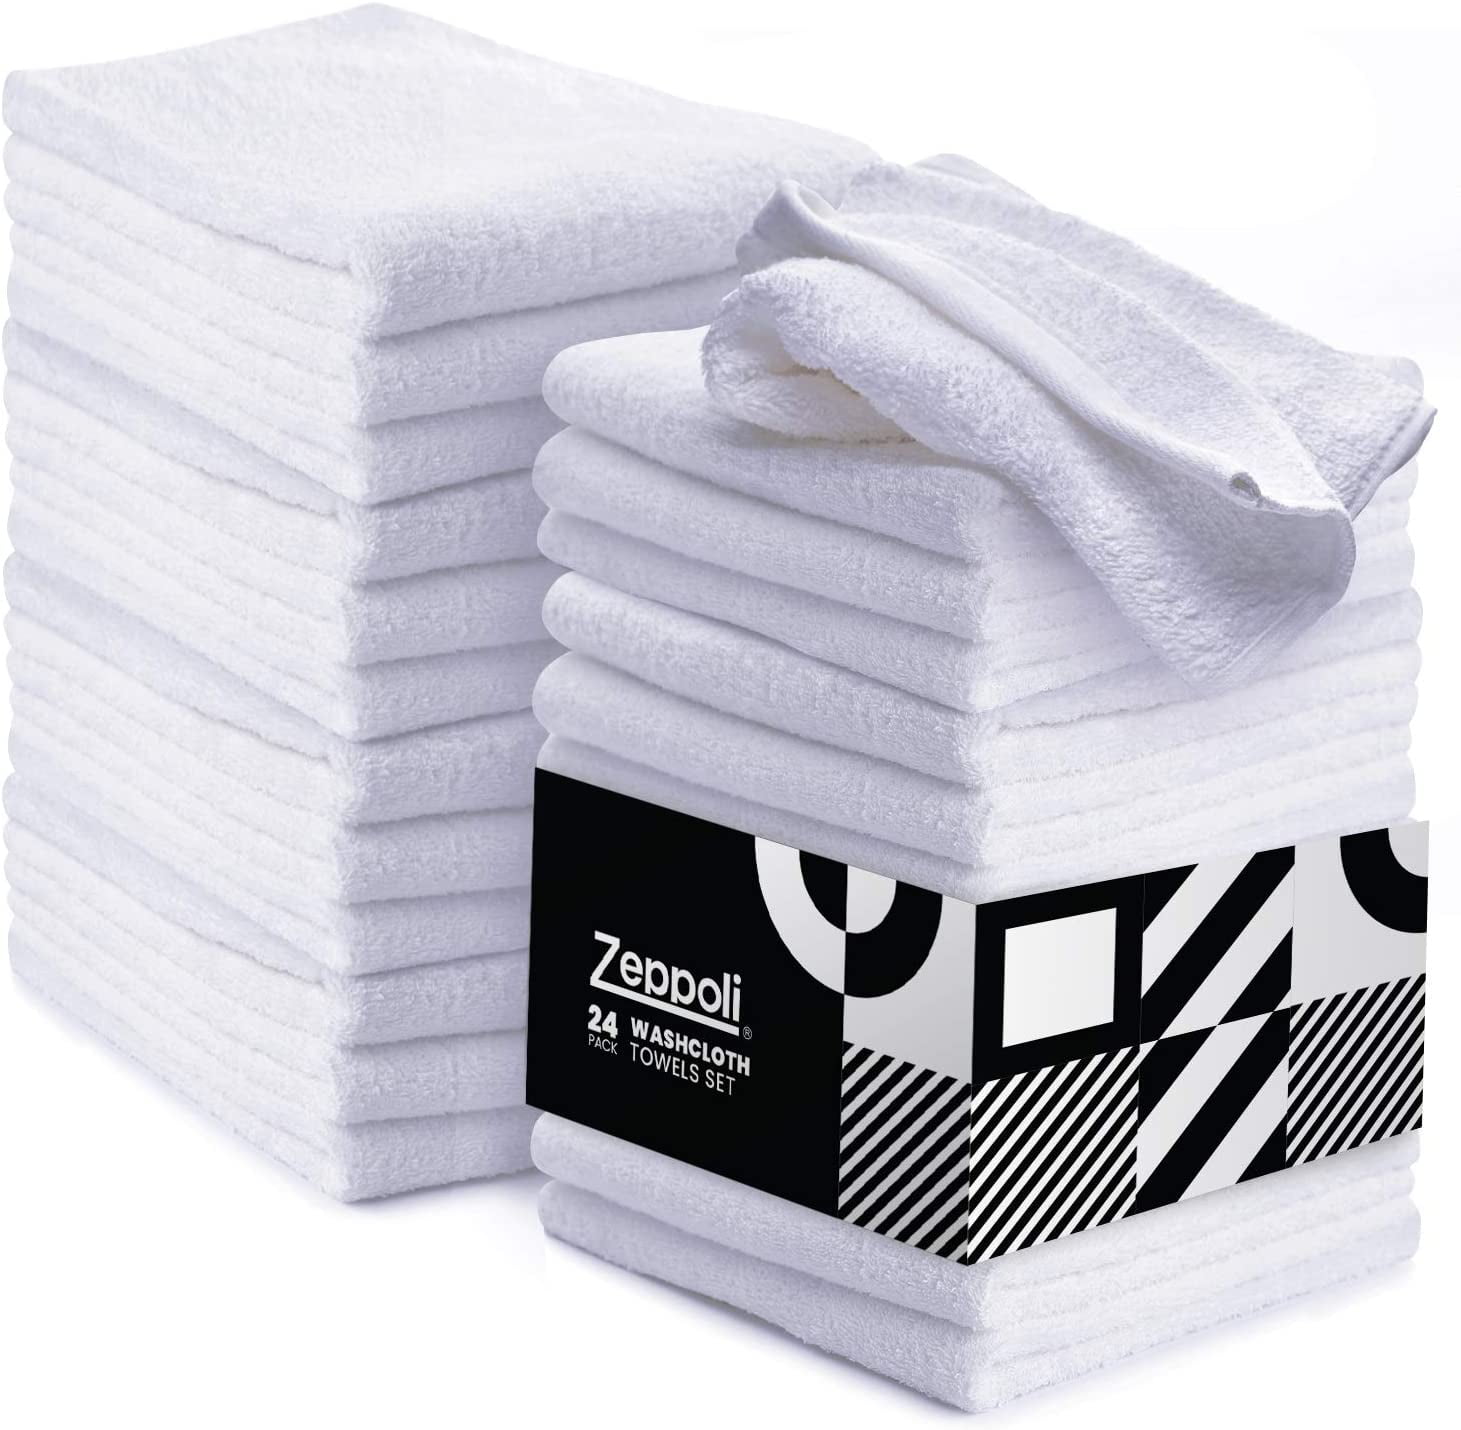 60 new white 100% cotton econ hotel wash cloths 12x12 washcloths 1# heavy duty 